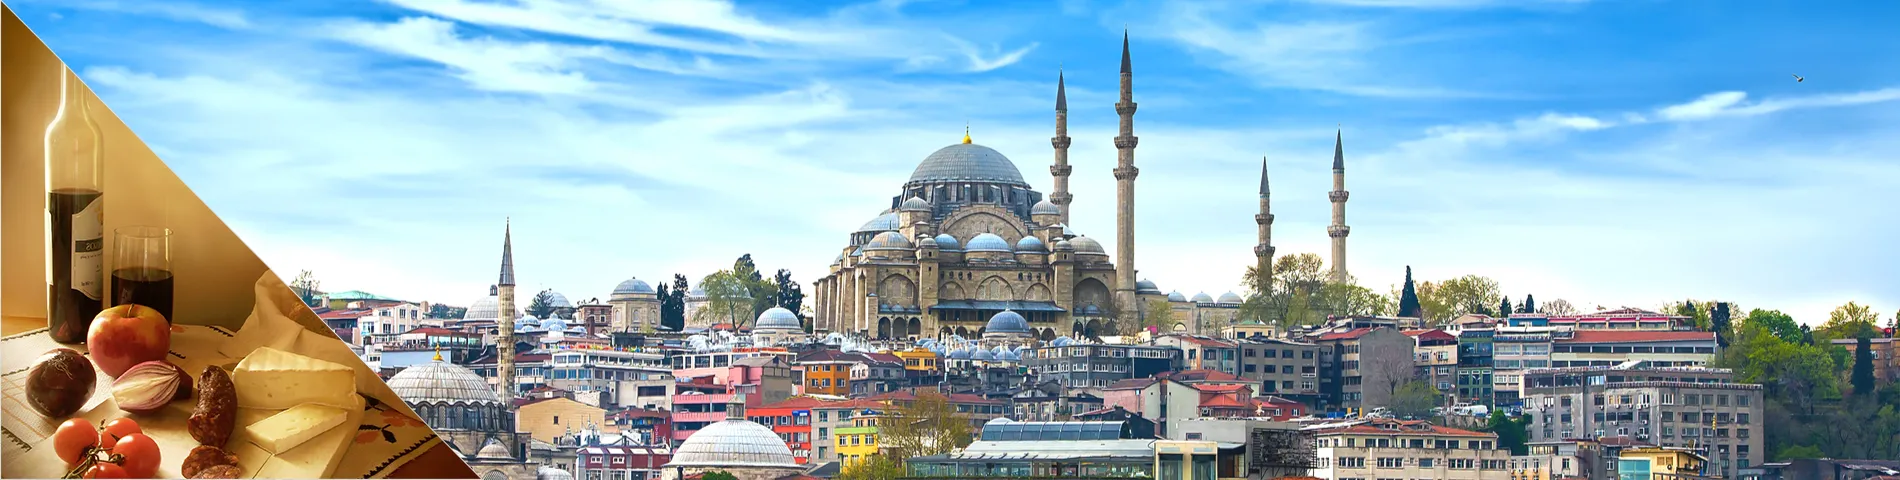 Турция - Турецкий и культура